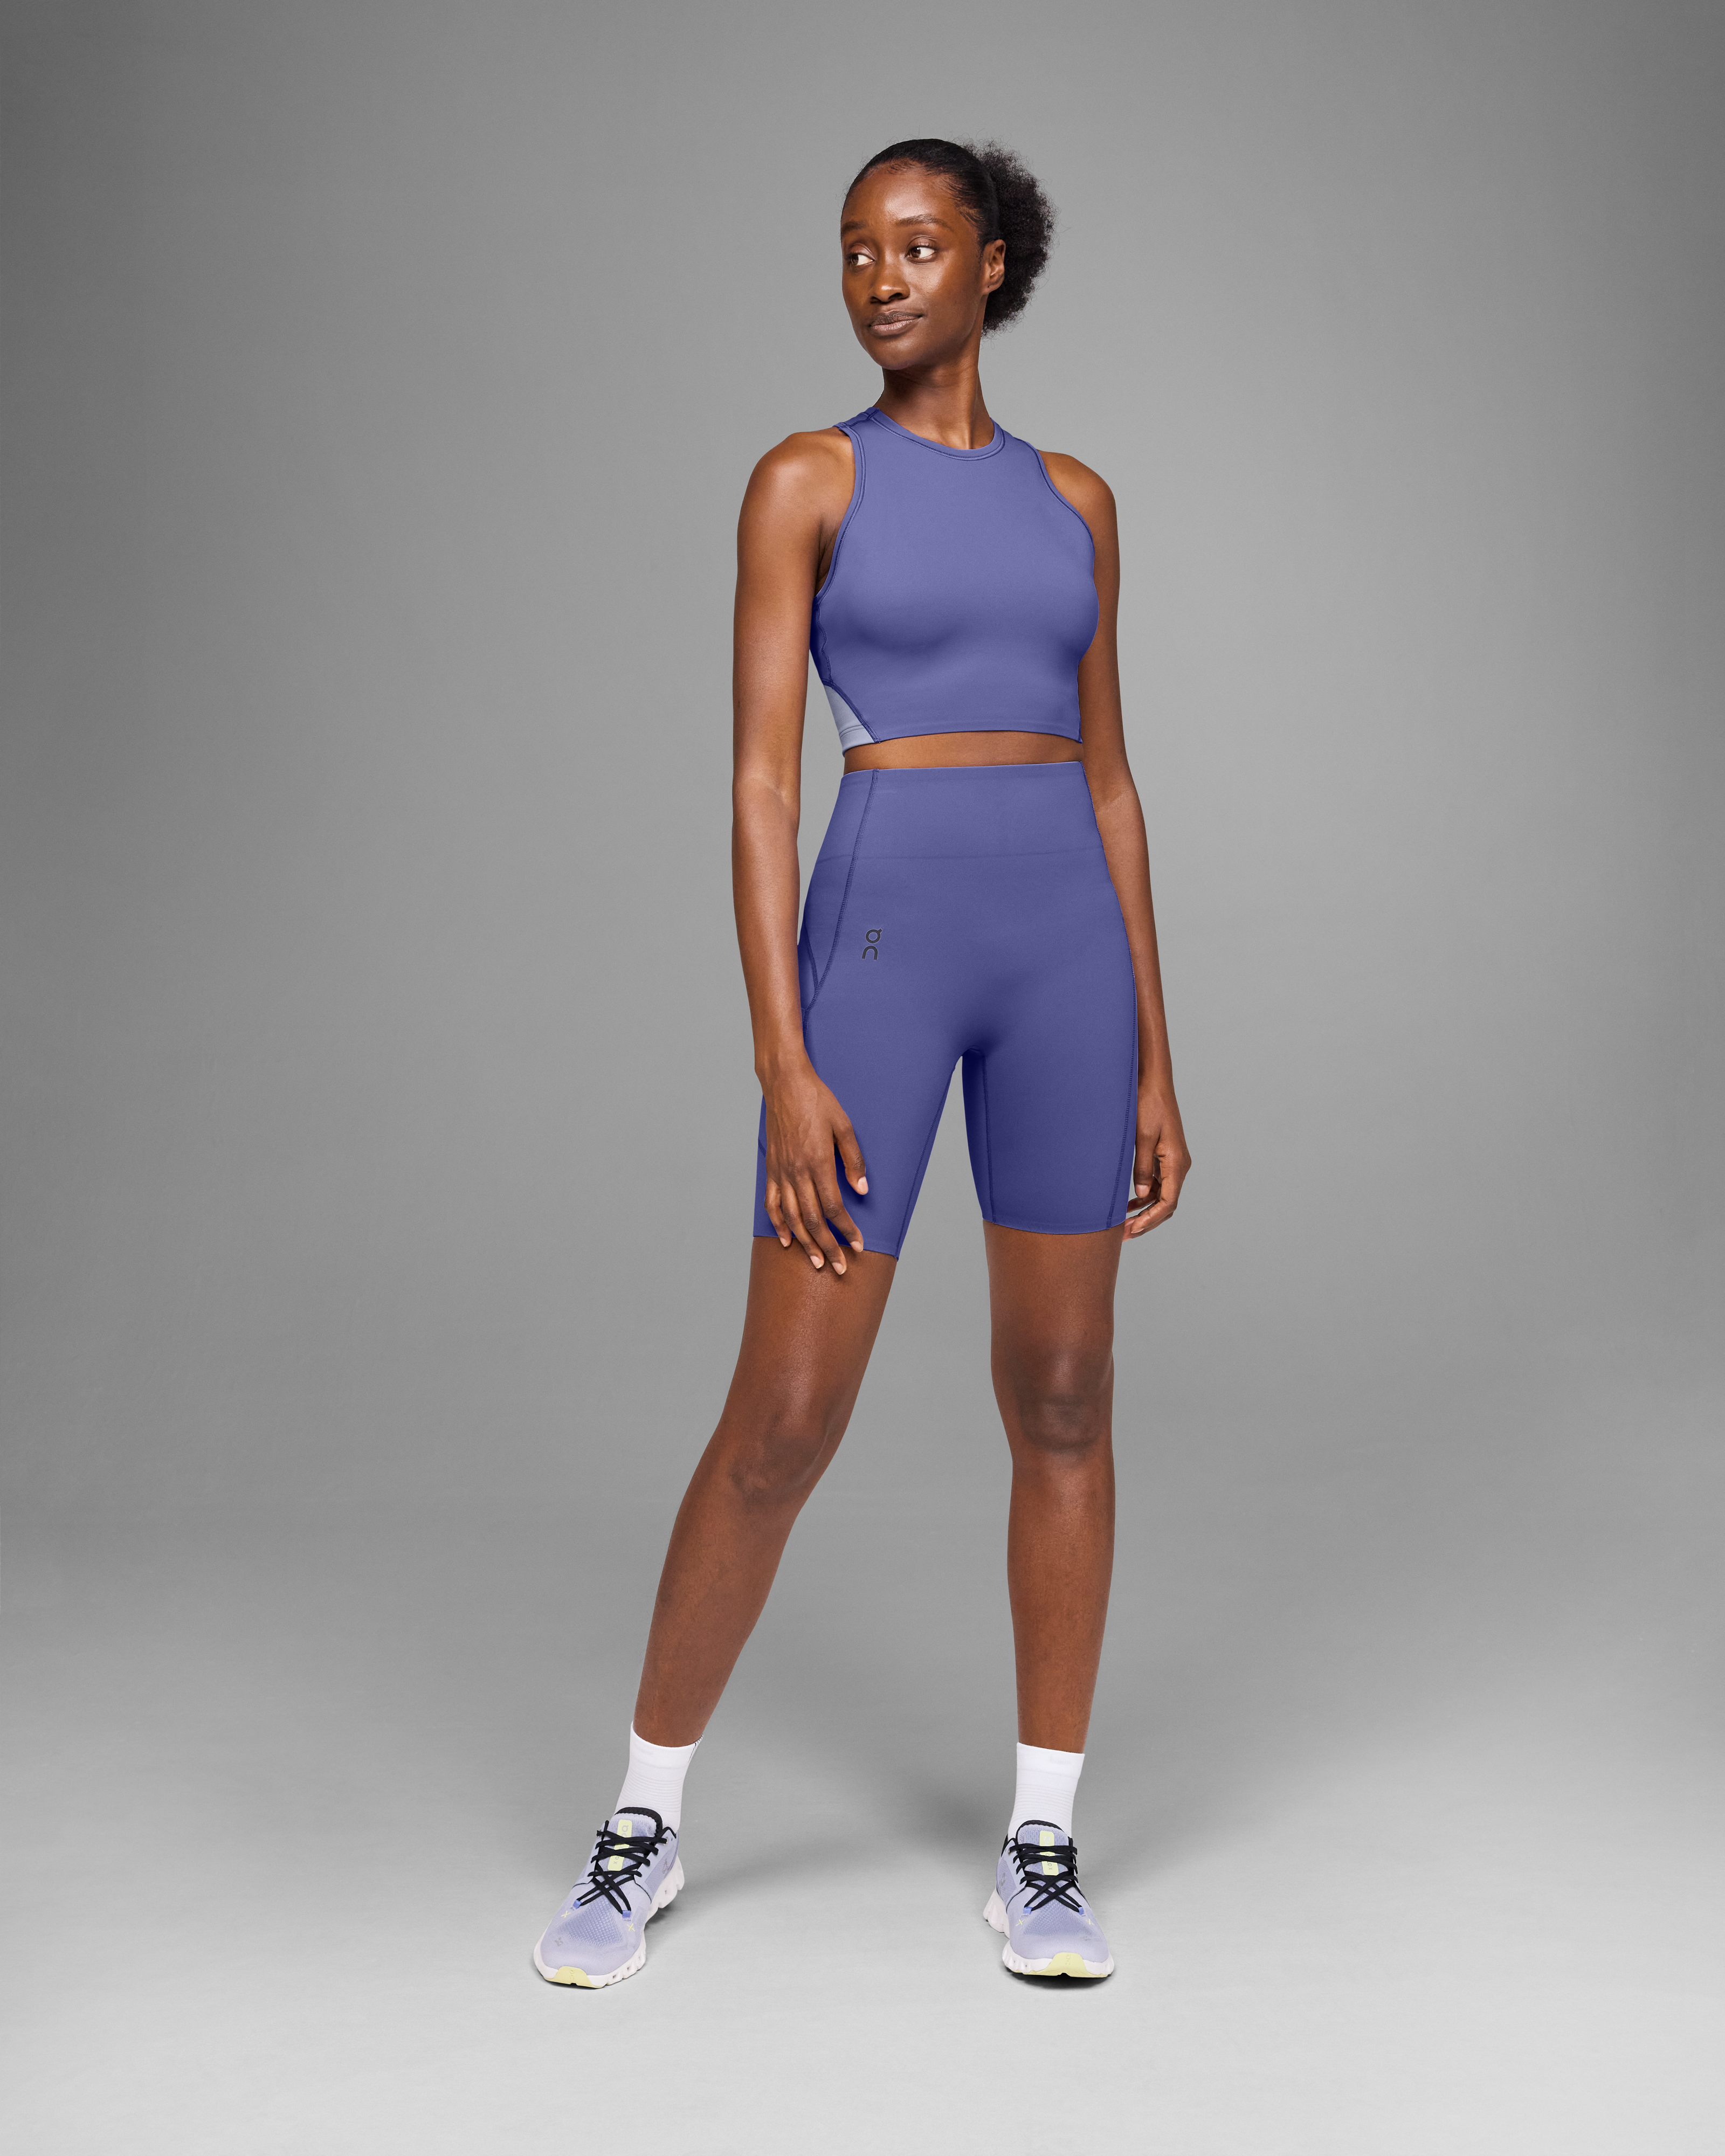 Spirit Feathers Women's Fashion Sleeveless Muscle Workout Yoga Tank Top  Charcoal Grey Medium 